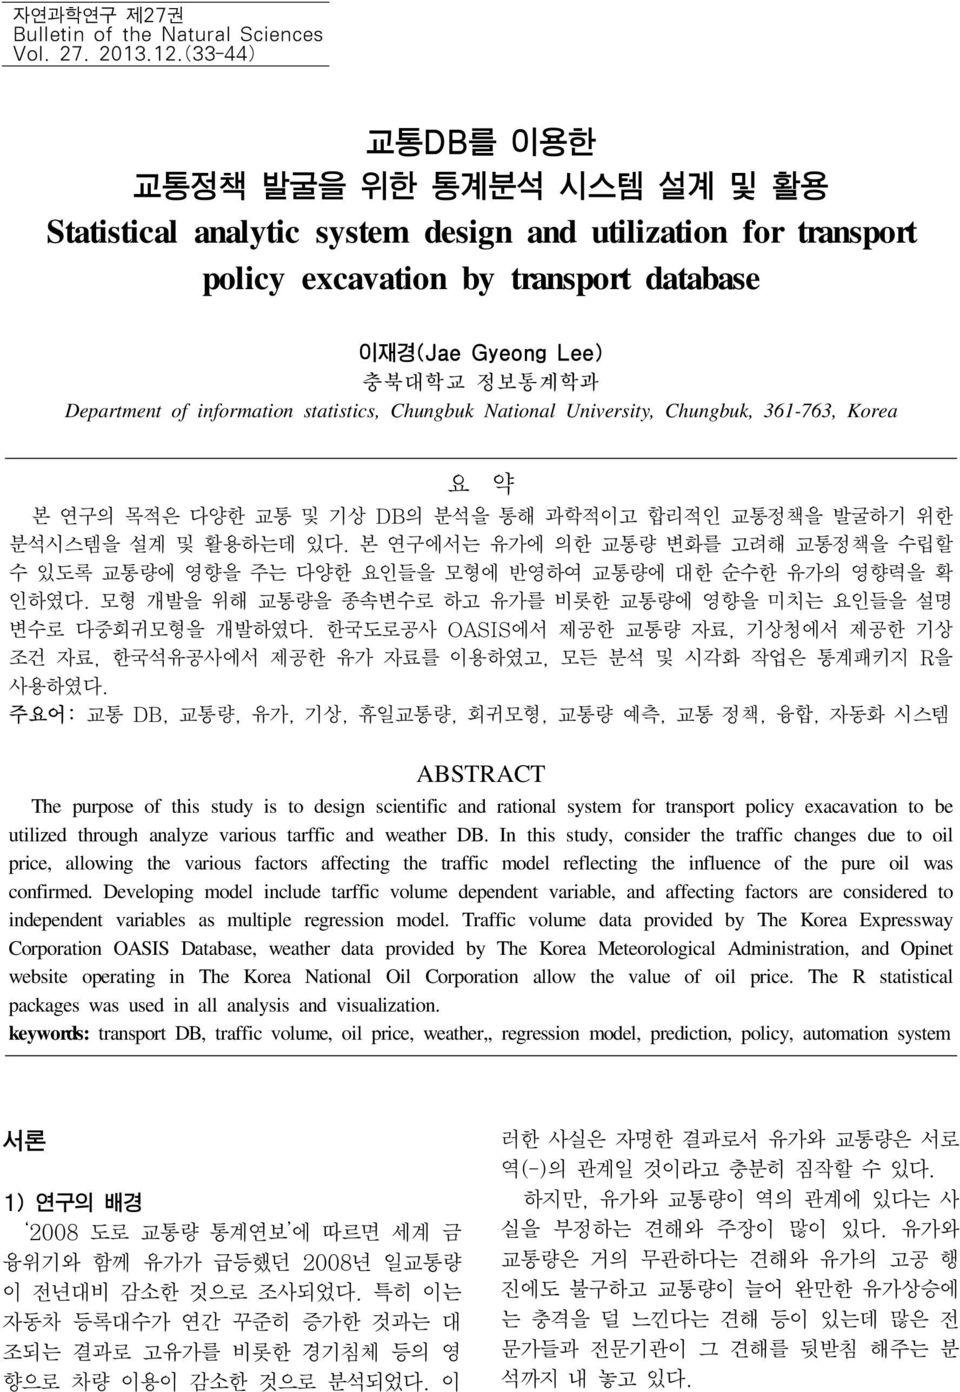 information statistics, Chungbuk National University, Chungbuk, 361-763, Korea 요 약 본 연구의 목적은 다양한 교통 및 기상 DB의 분석을 통해 과학적이고 합리적인 교통정책을 발굴하기 위한 분석시스템을 설계 및 활용하는데 있다.